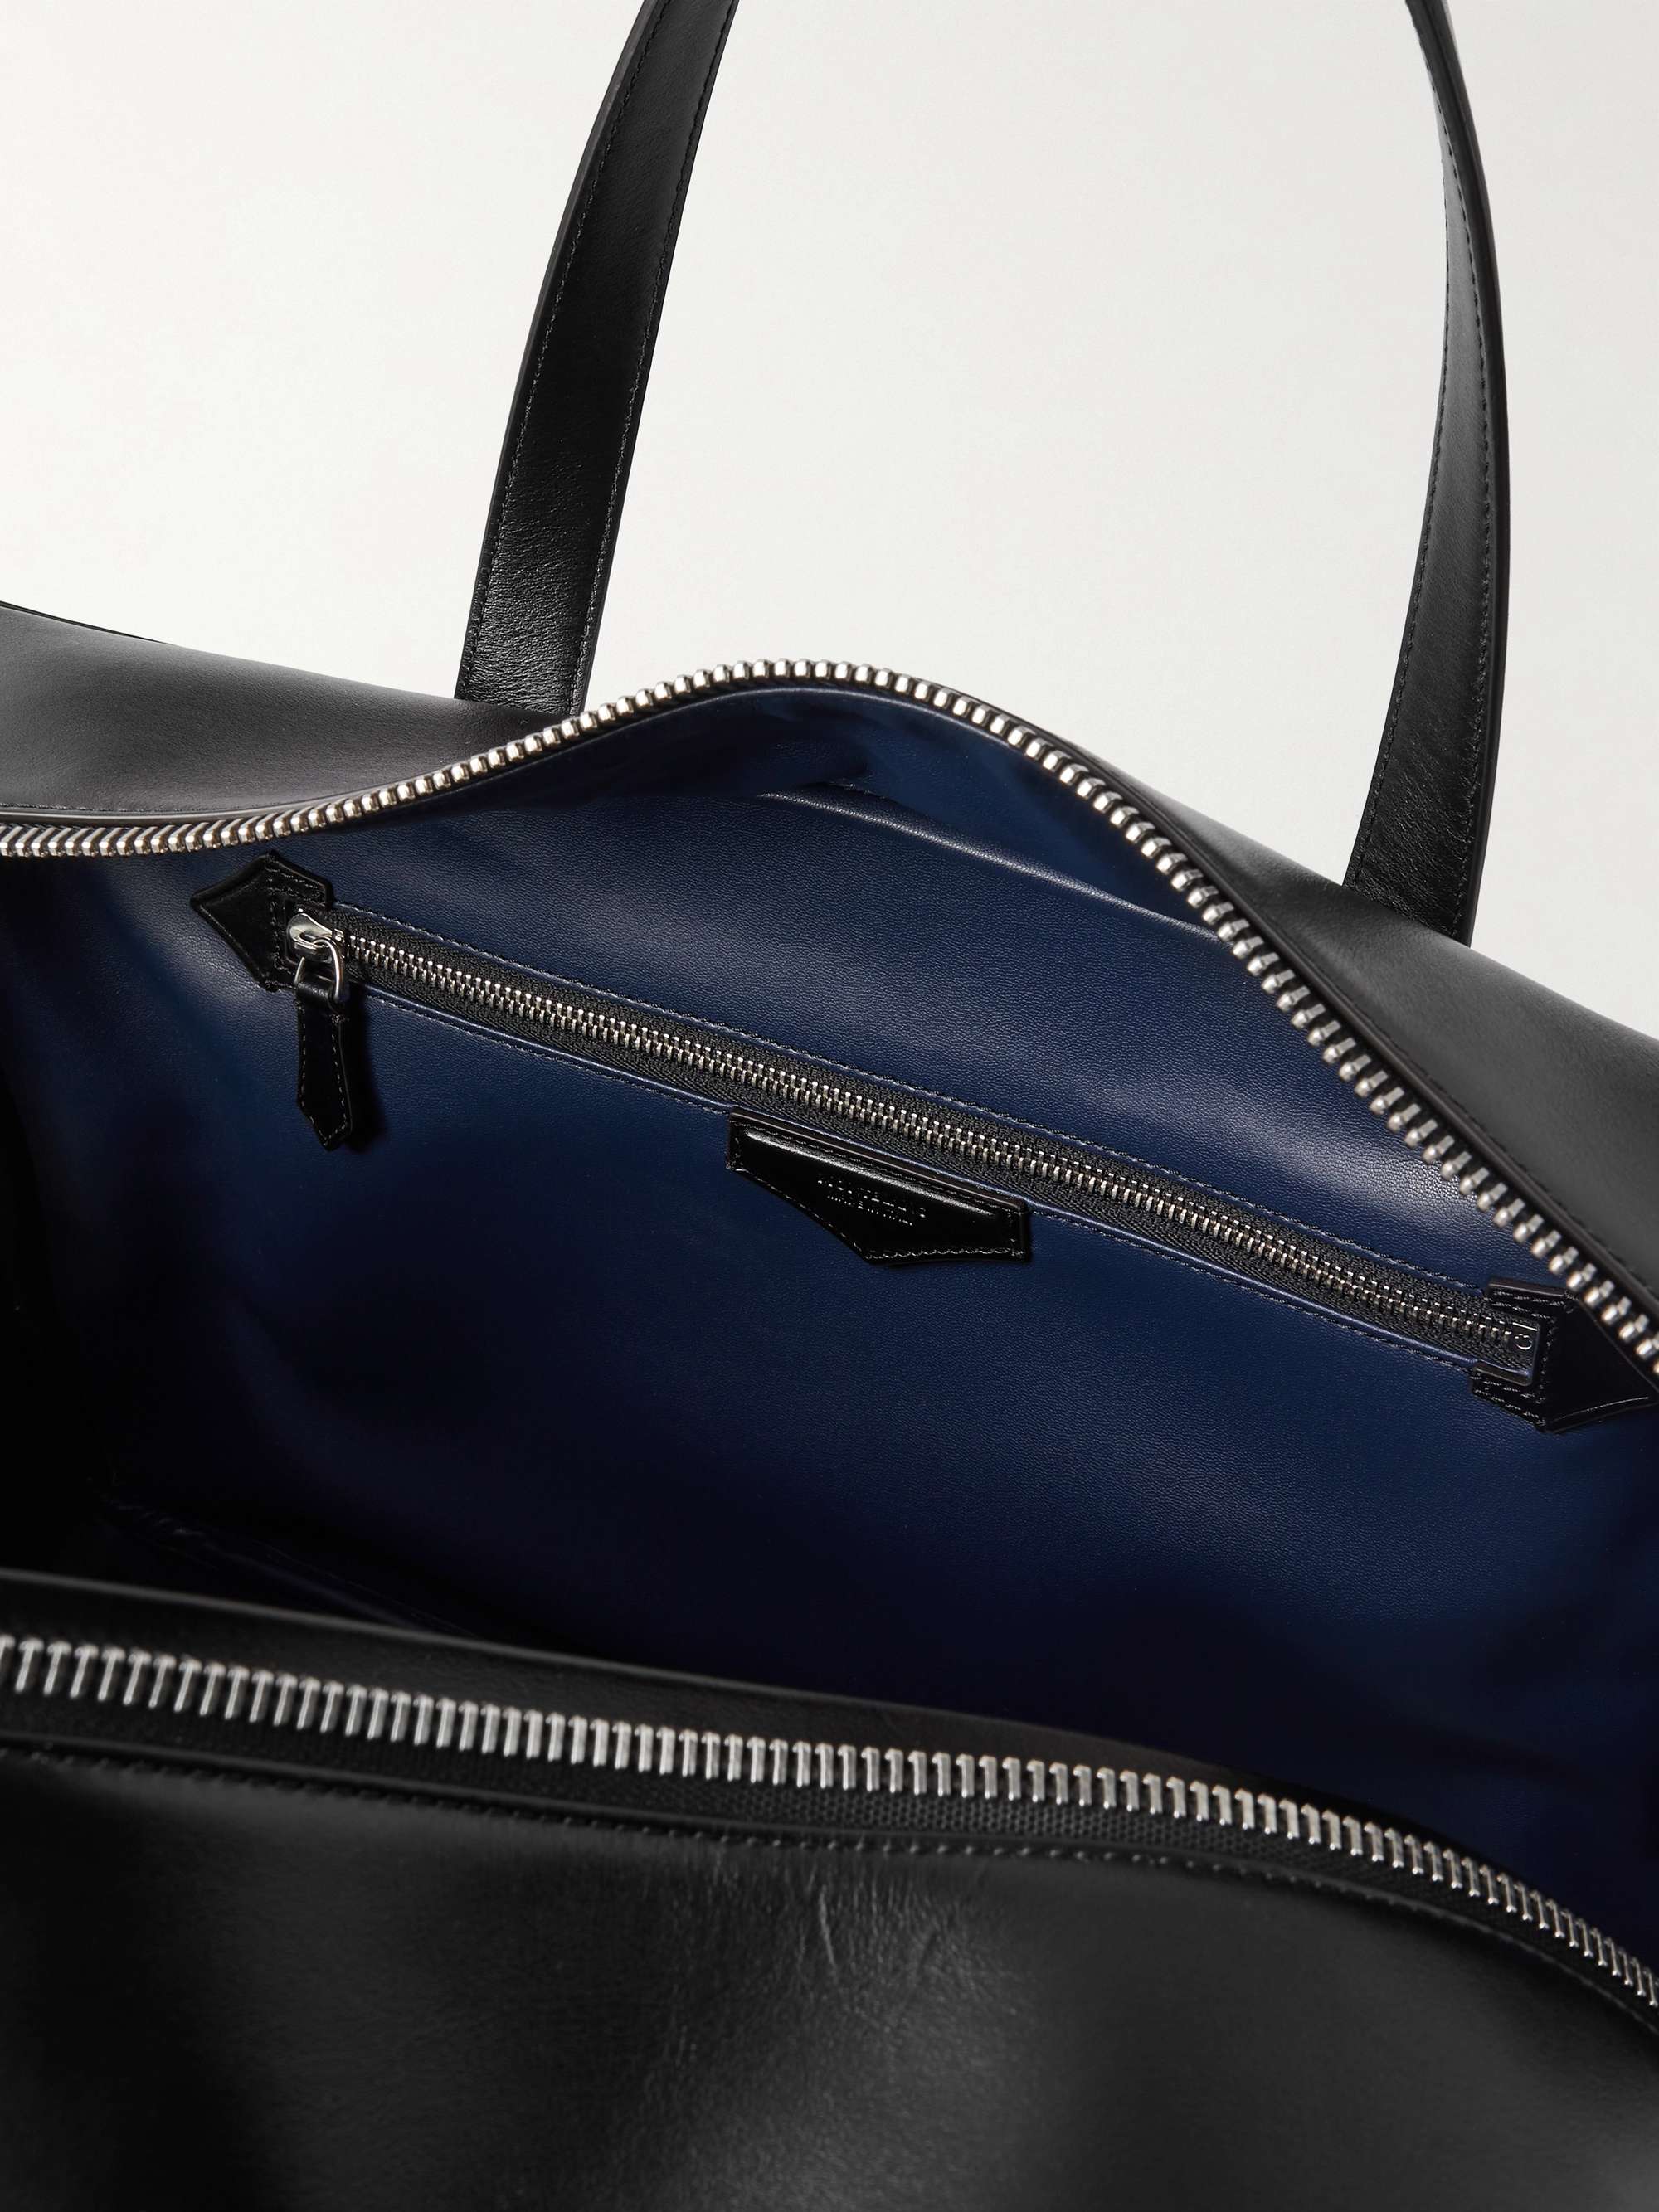 MONTBLANC Meisterstück Leather Duffle Bag